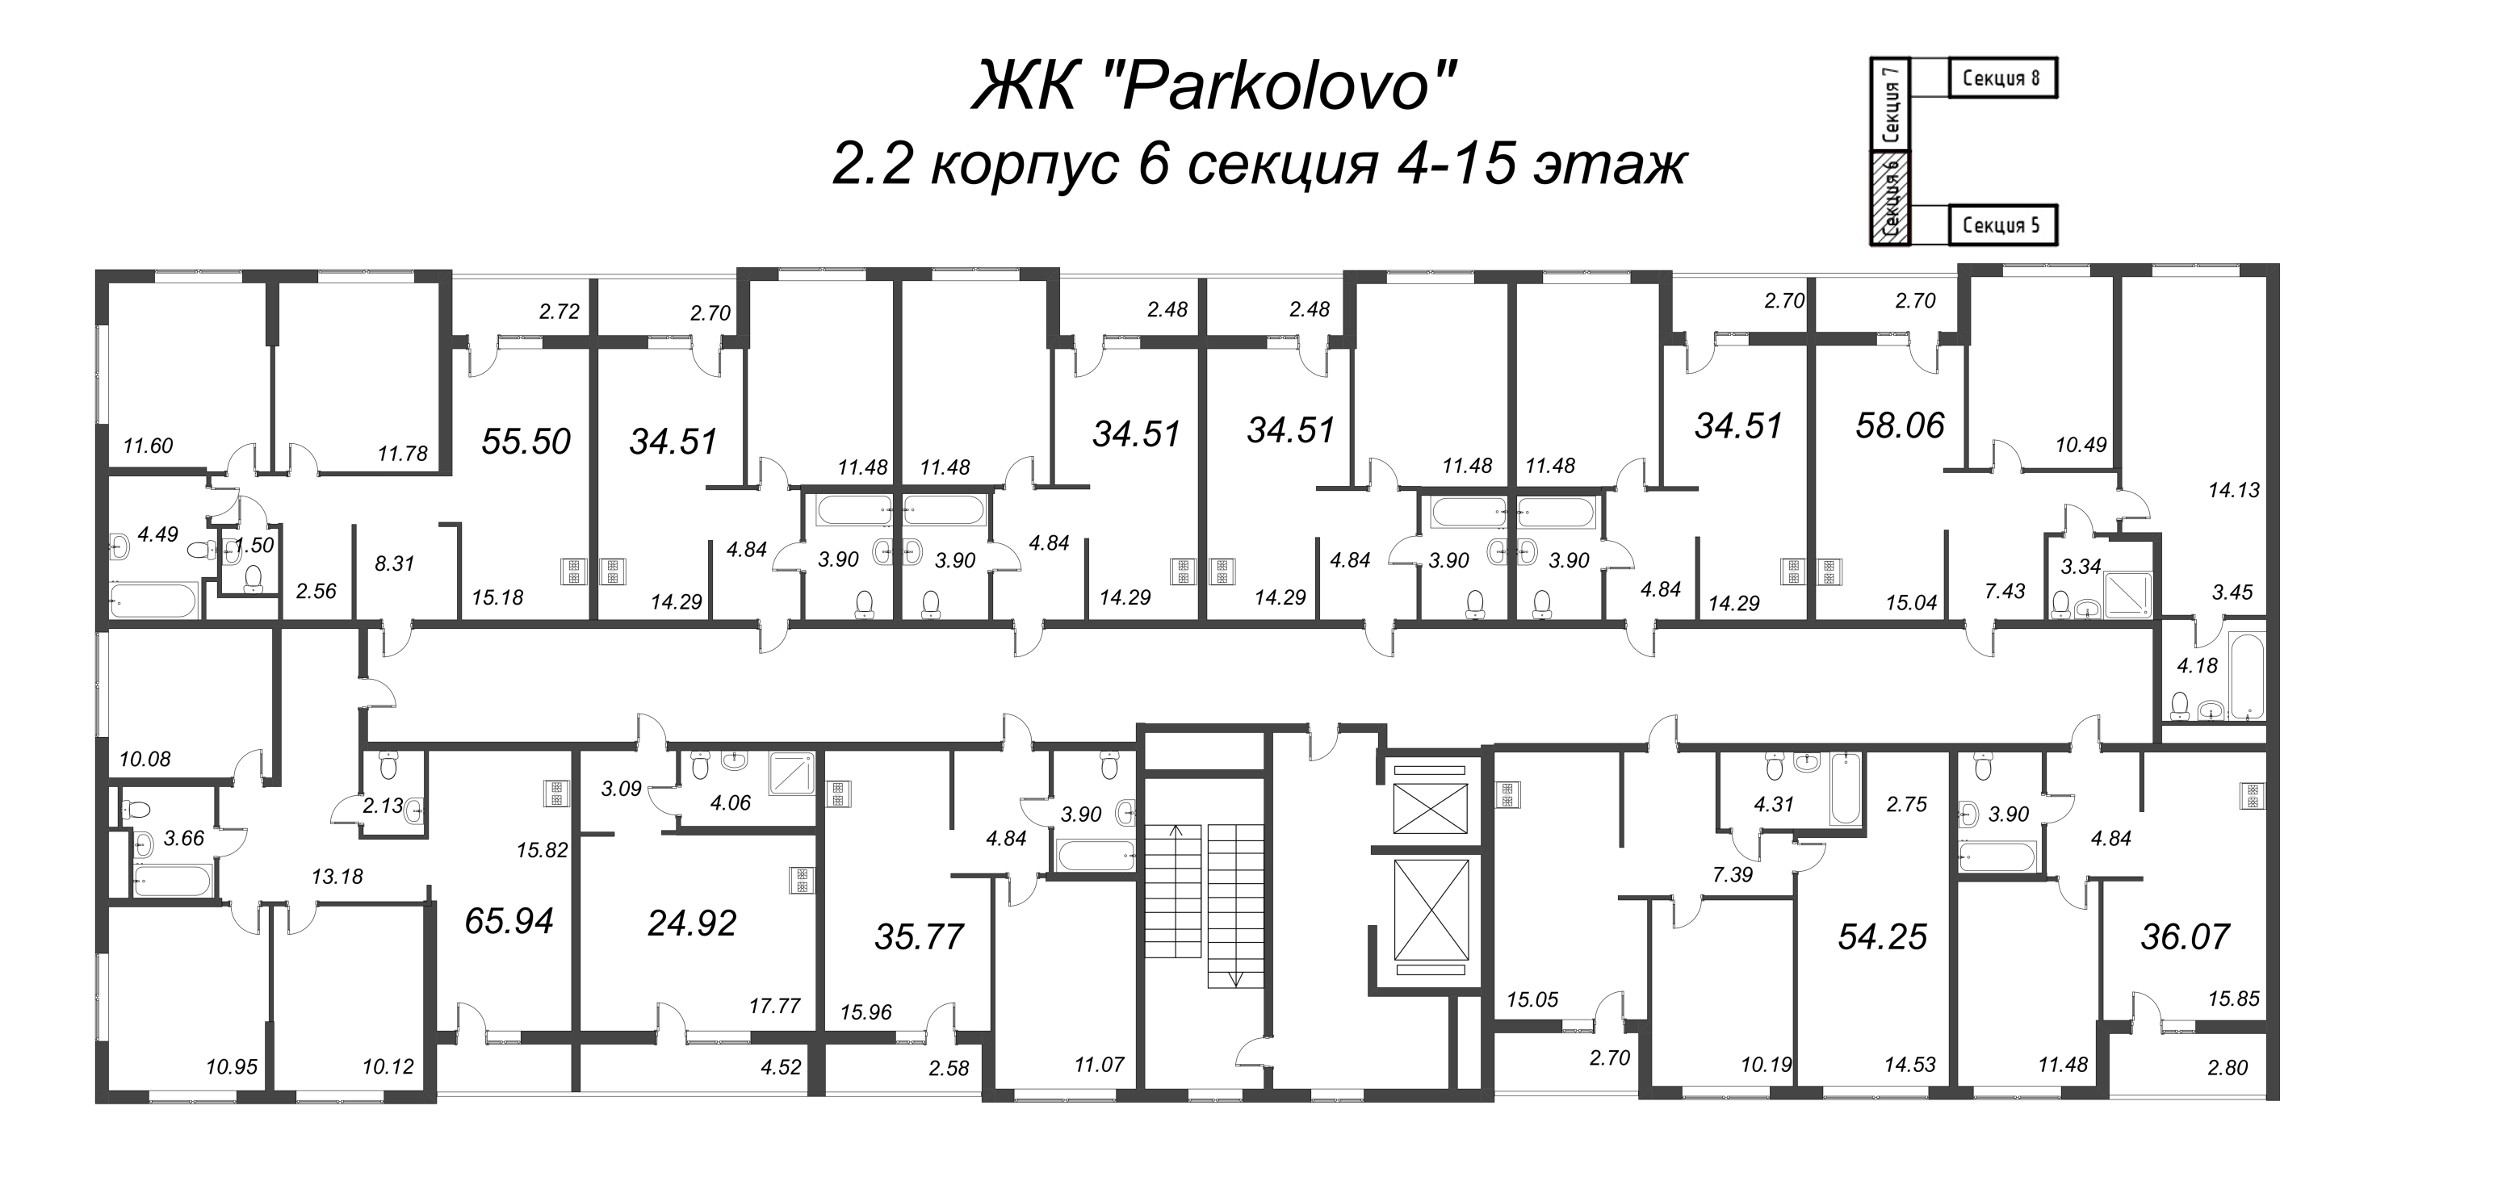 4-комнатная (Евро) квартира, 65.94 м² - планировка этажа